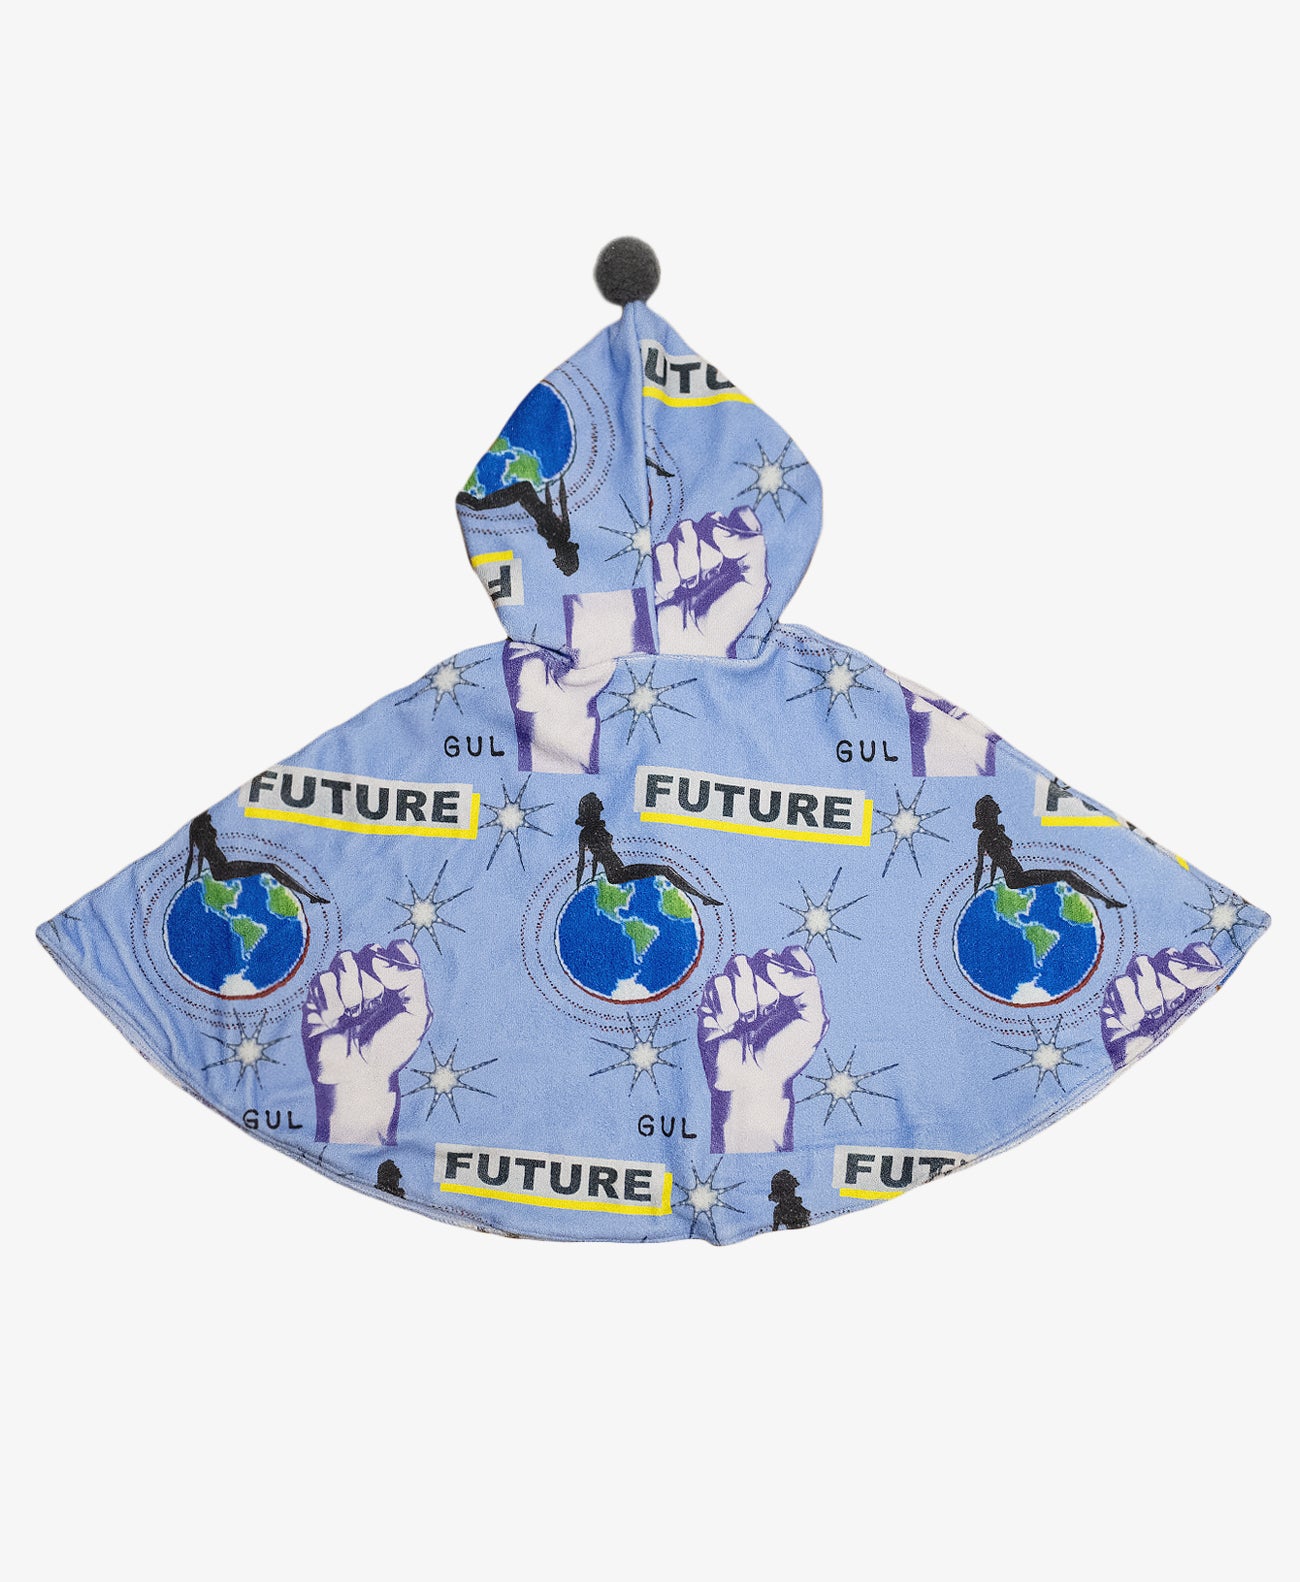 “FUTURE” Hooded Soft Blanket Poncho